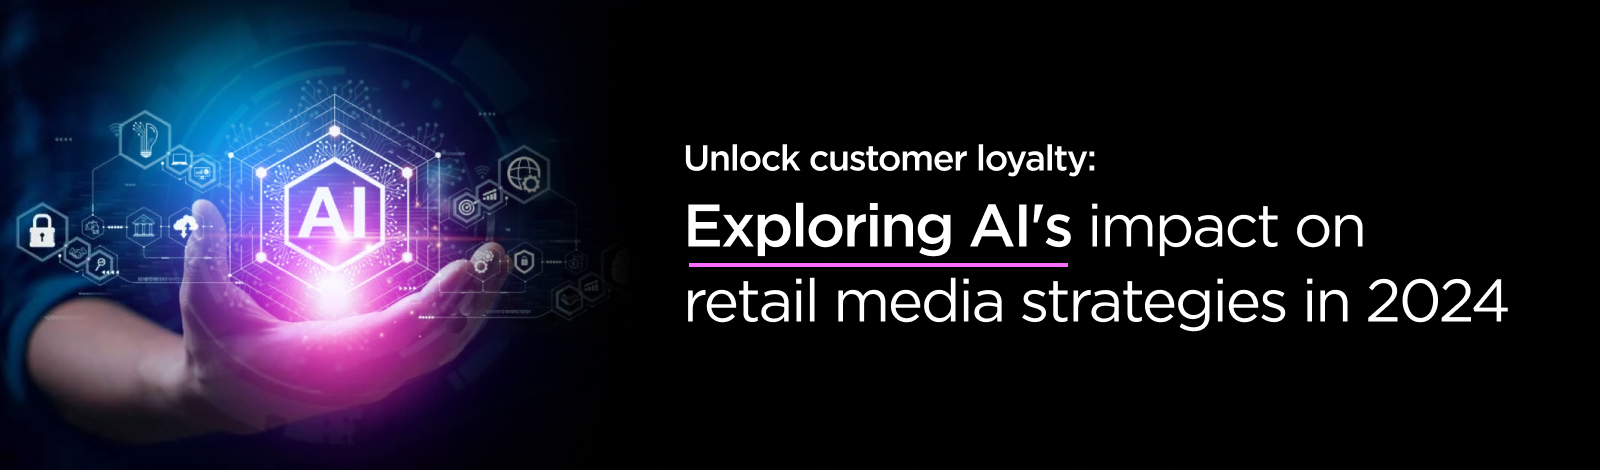 Unlock customer loyalty: Exploring AI's impact on retail media strategies in 2024